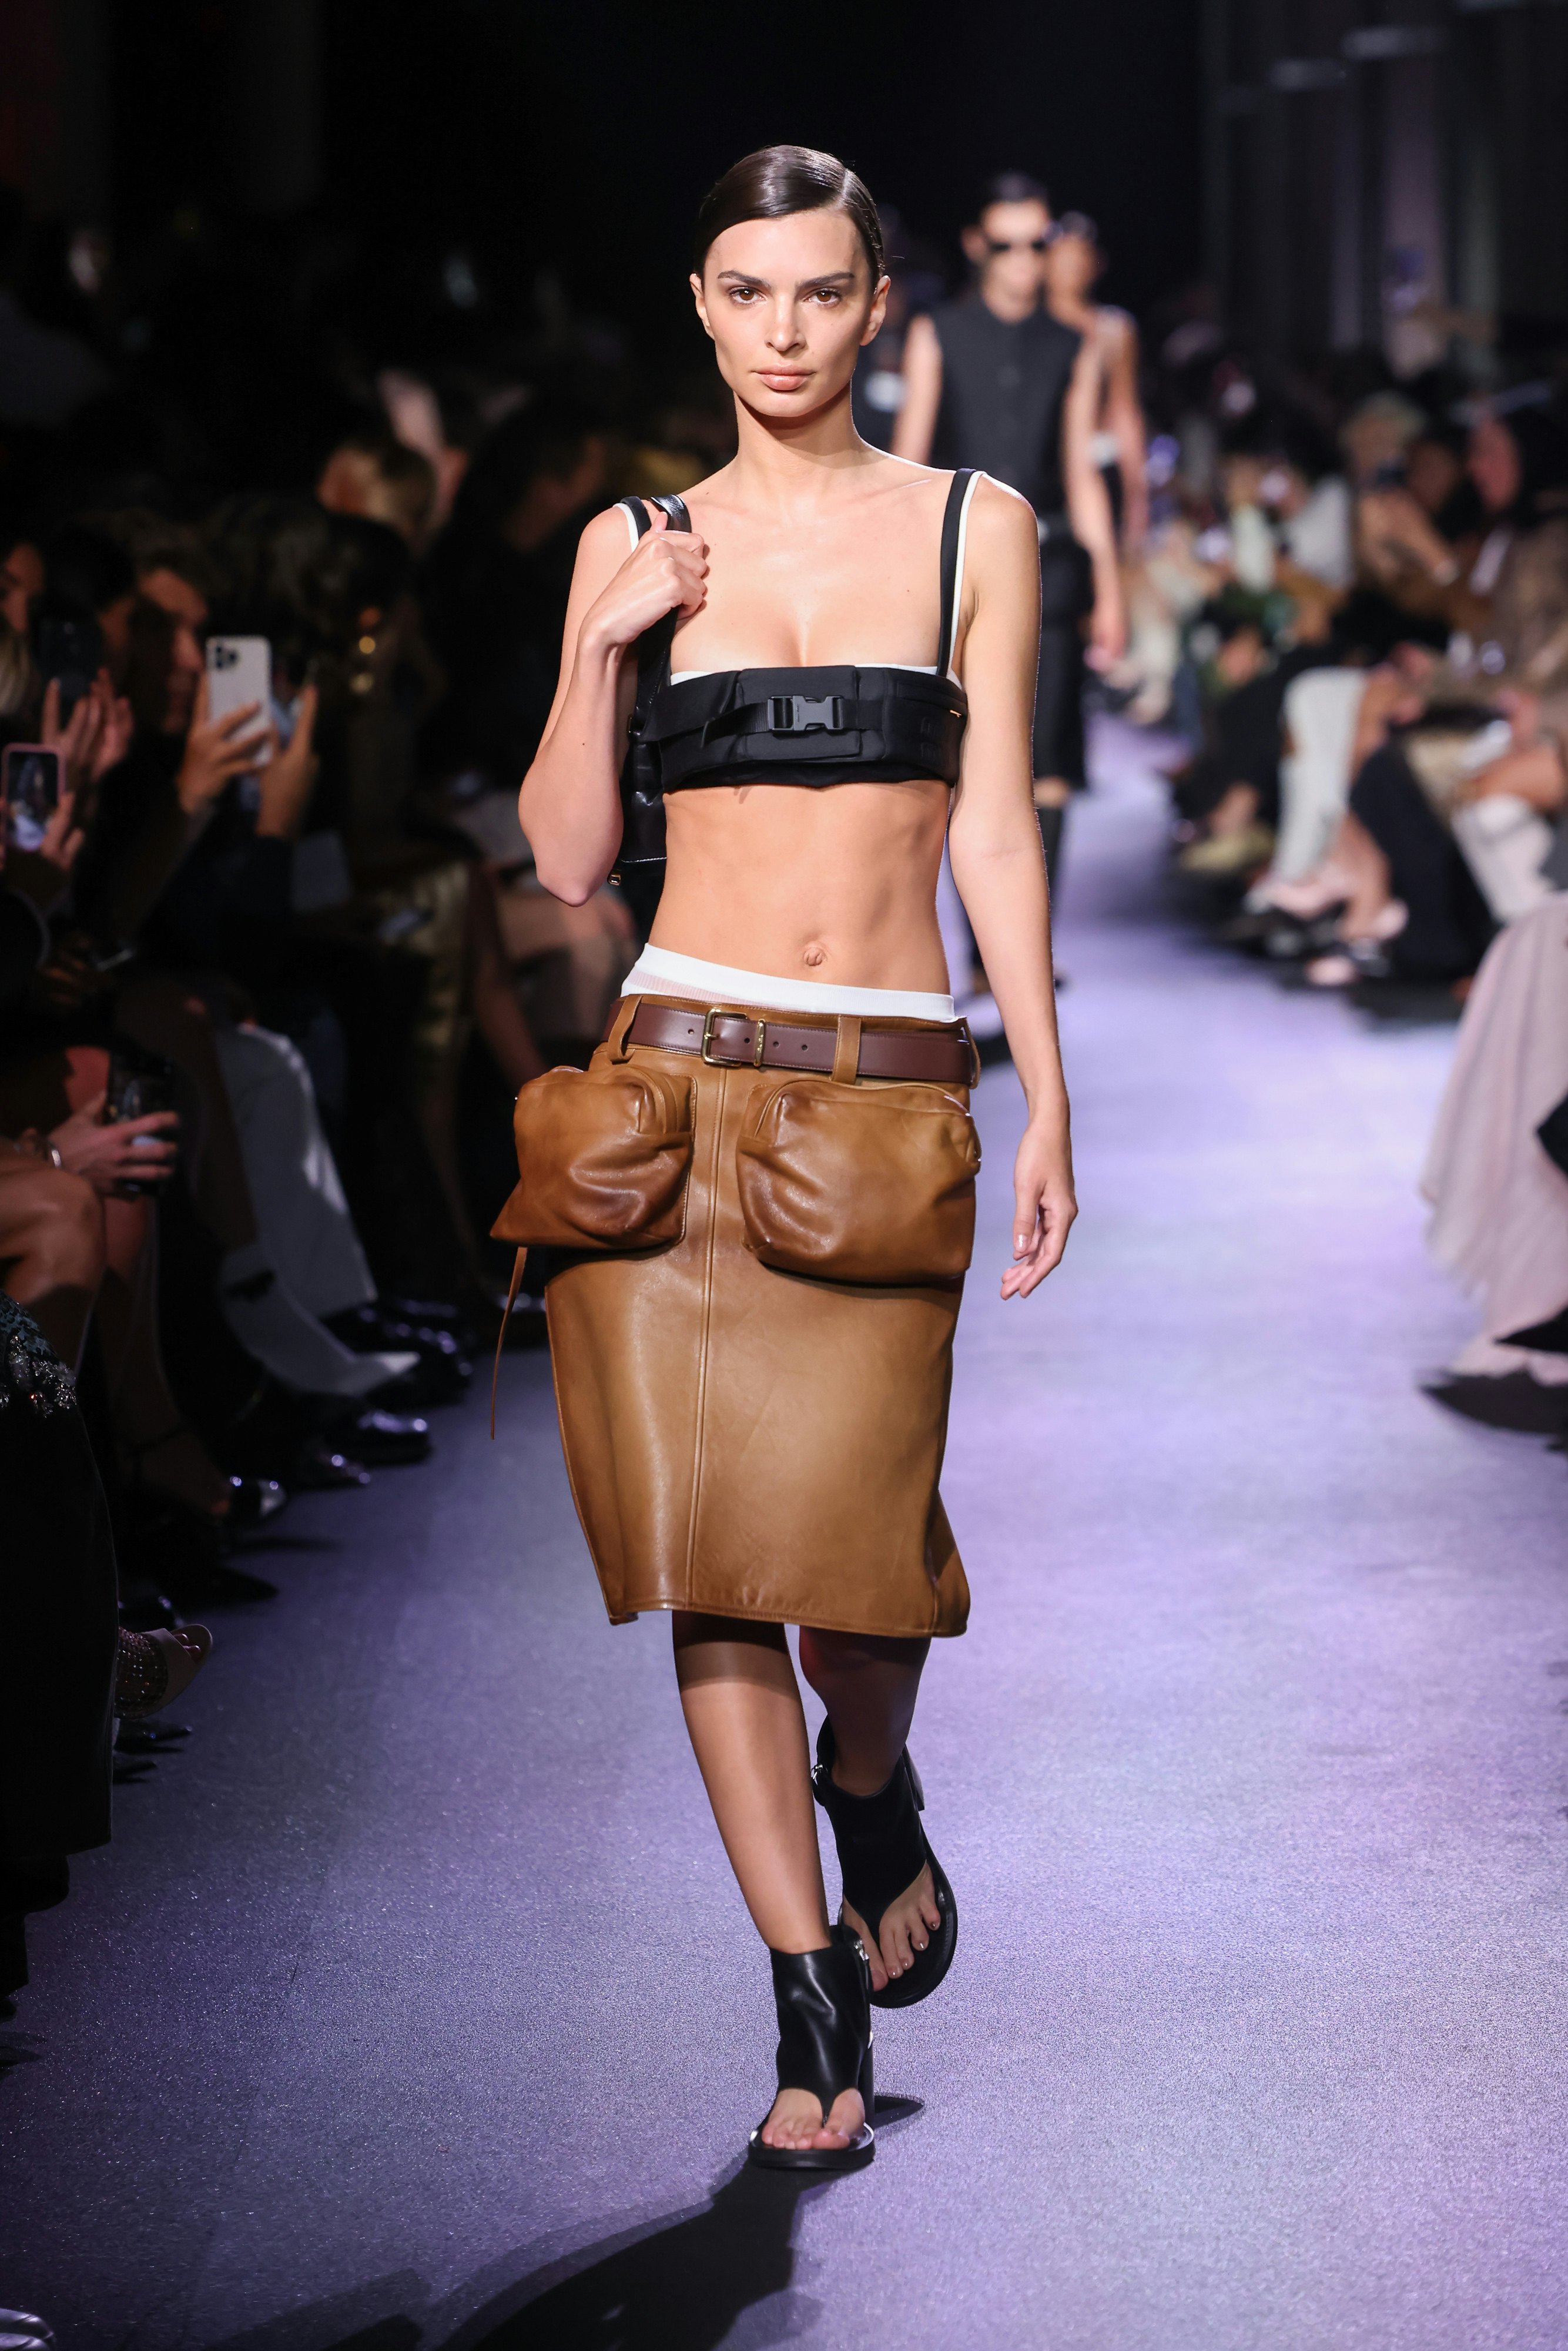 Miu Miu Spring 2023 Paris Fashion Week Review: A Minimal '90s Uniform